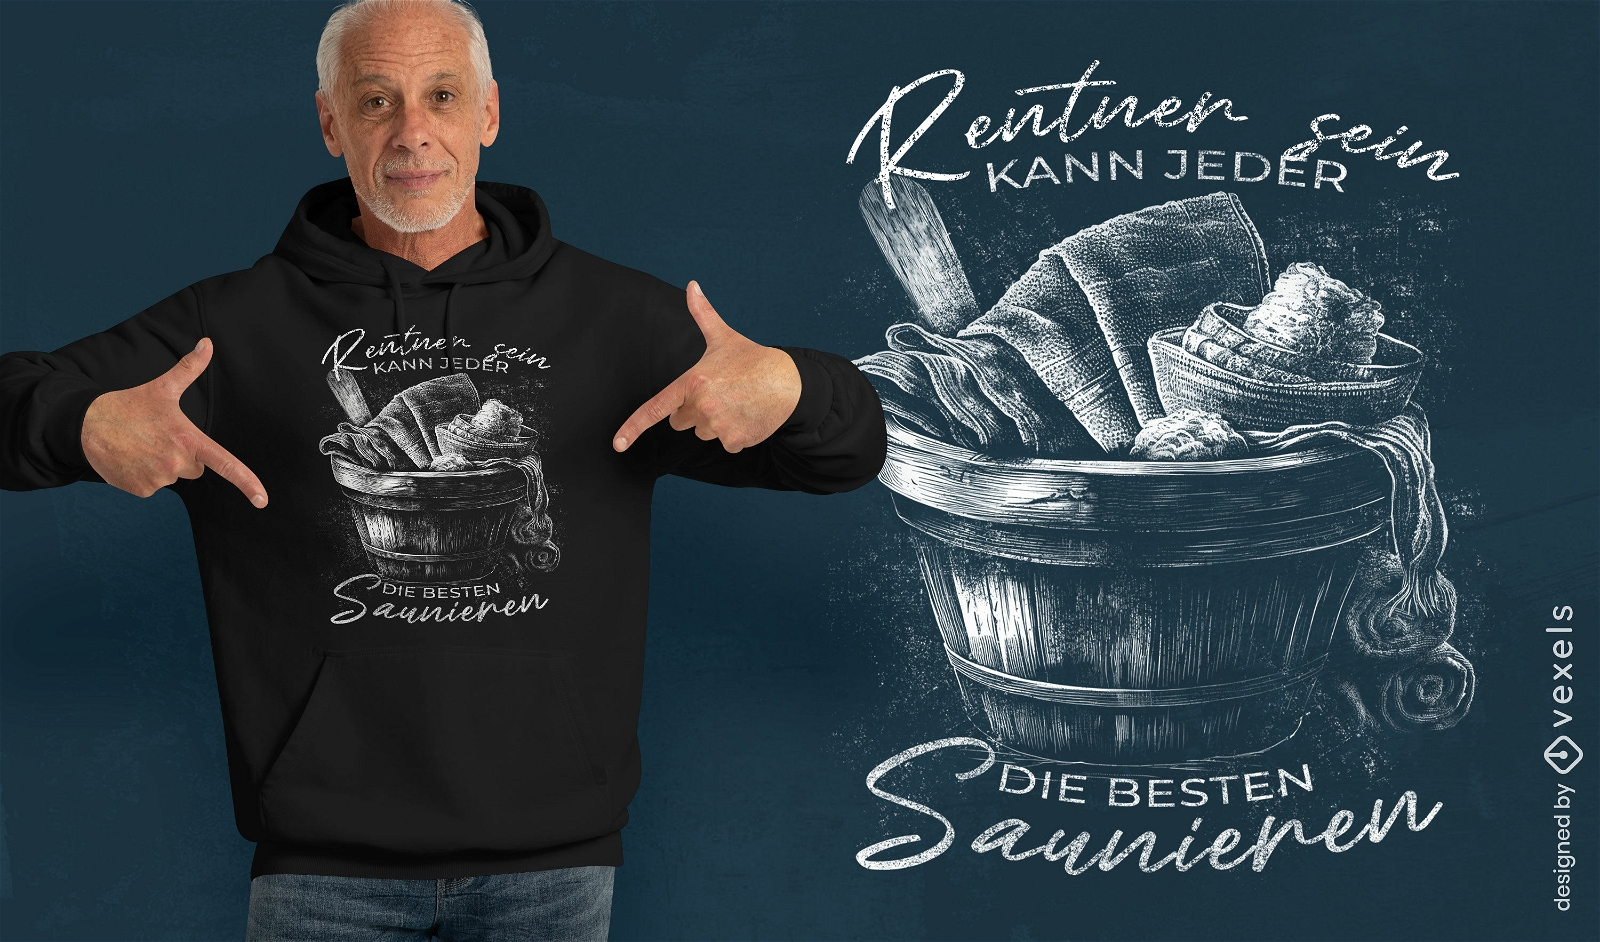 Sauna-themed humorous t-shirt design